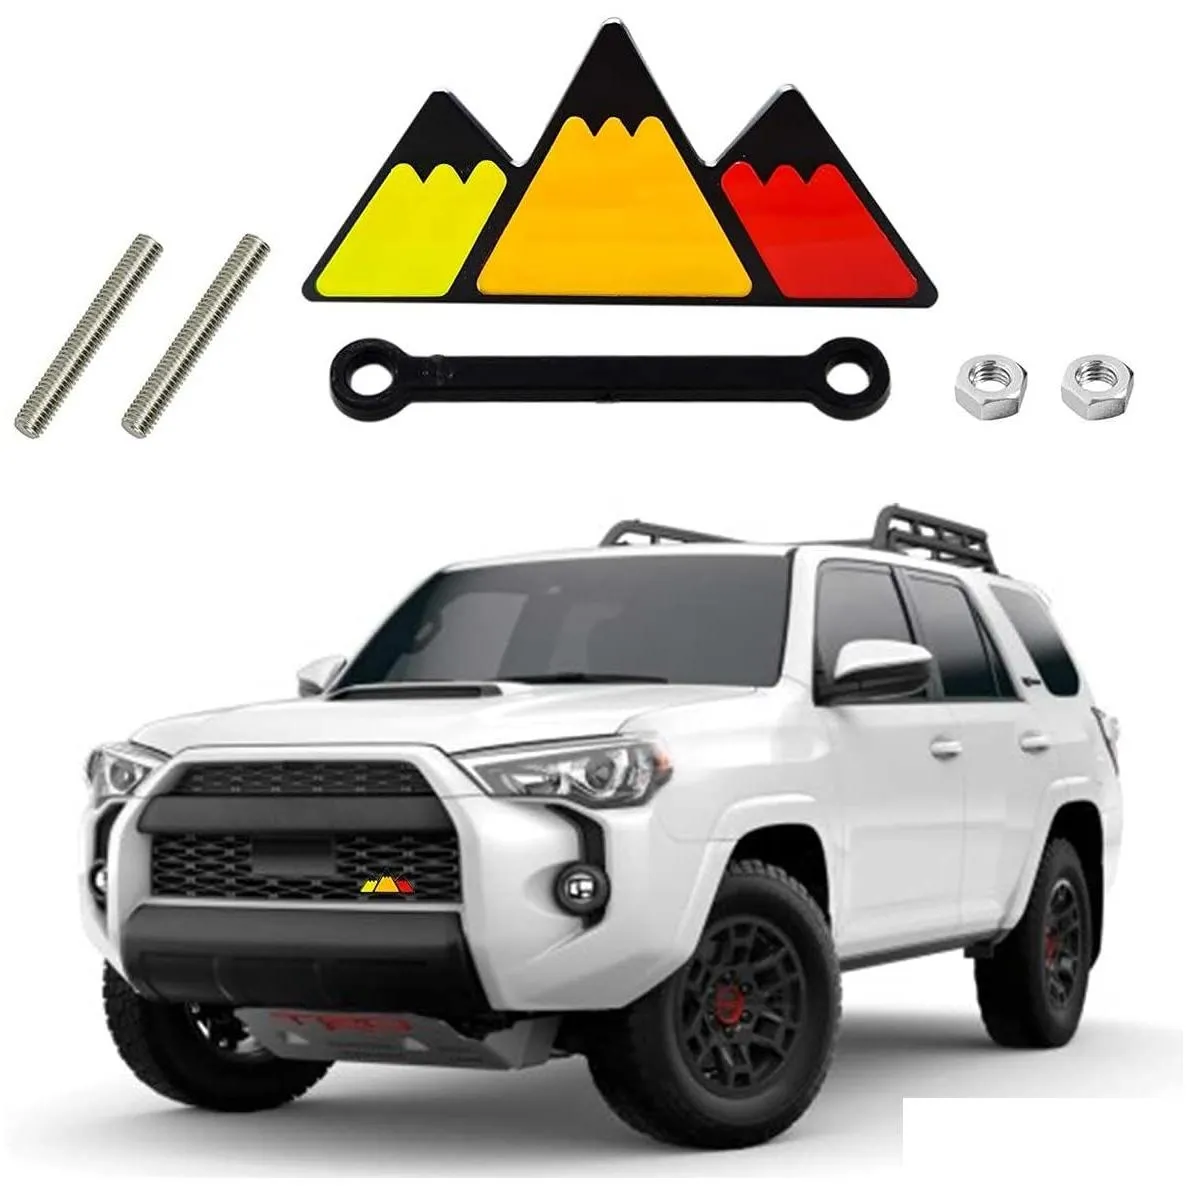 tricolor grille emblem car truck sticker badge for tacoma 4runner tundra sequoia rav4 highlander decoration accessories